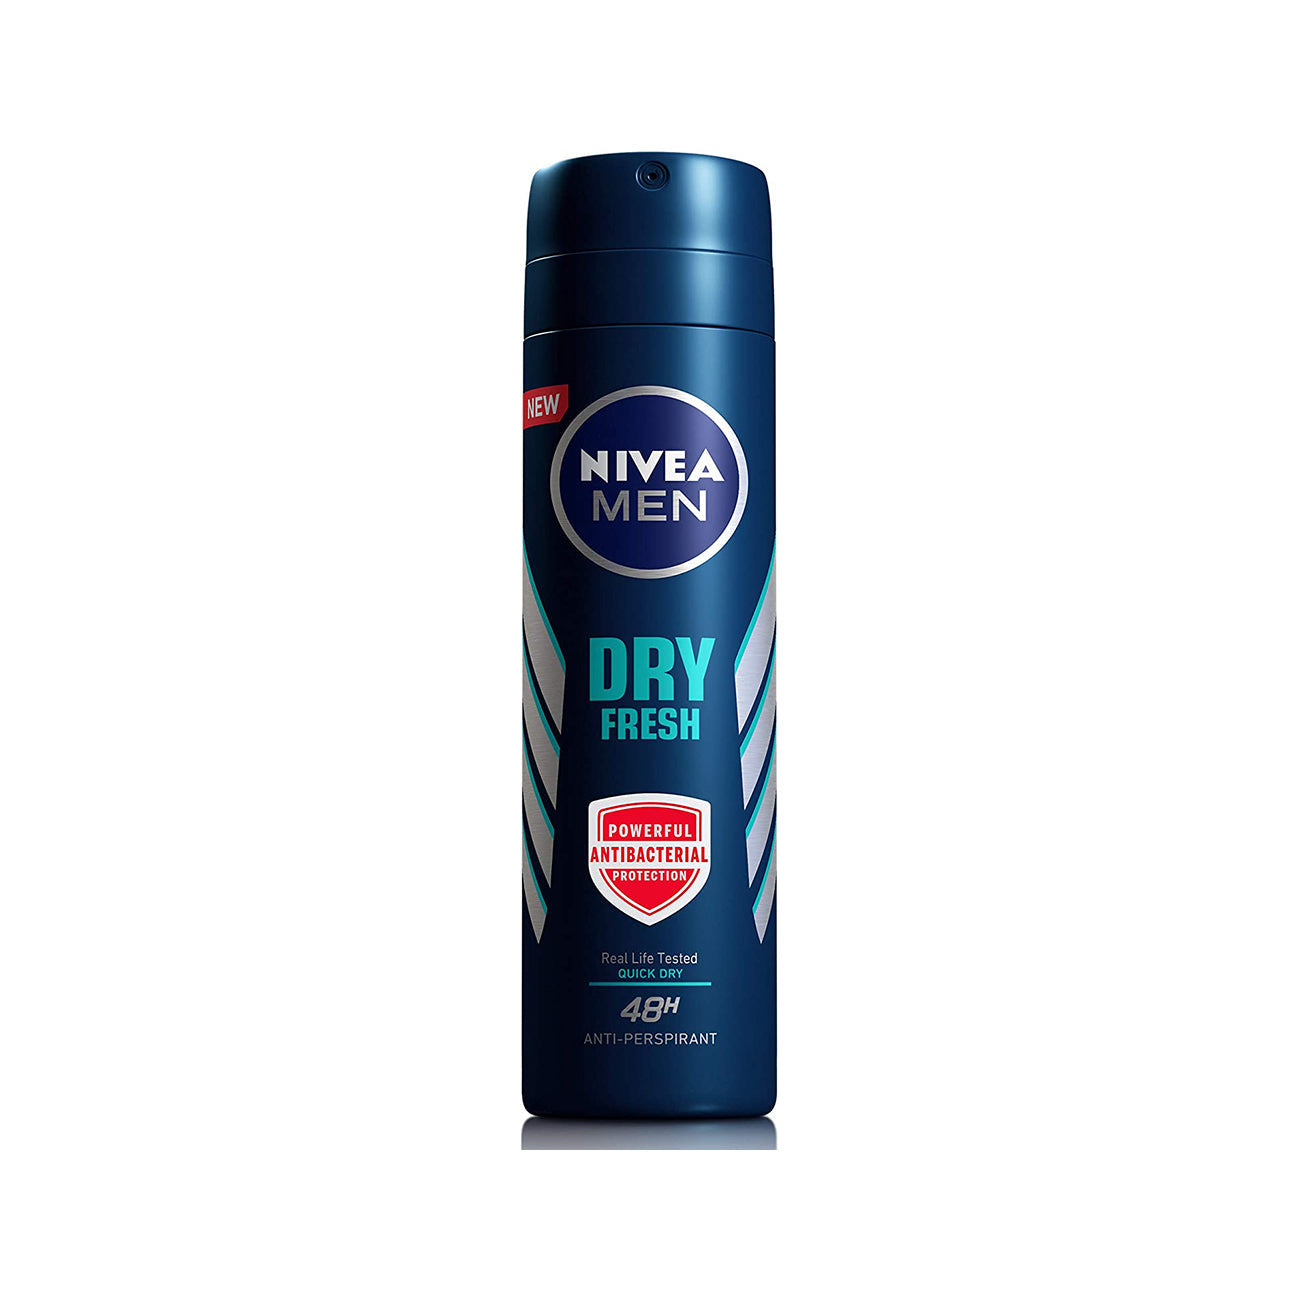 NIVEA MEN Antiperspirant Spray for Men, Dry Fresh Antibacterial Protection, 150ml